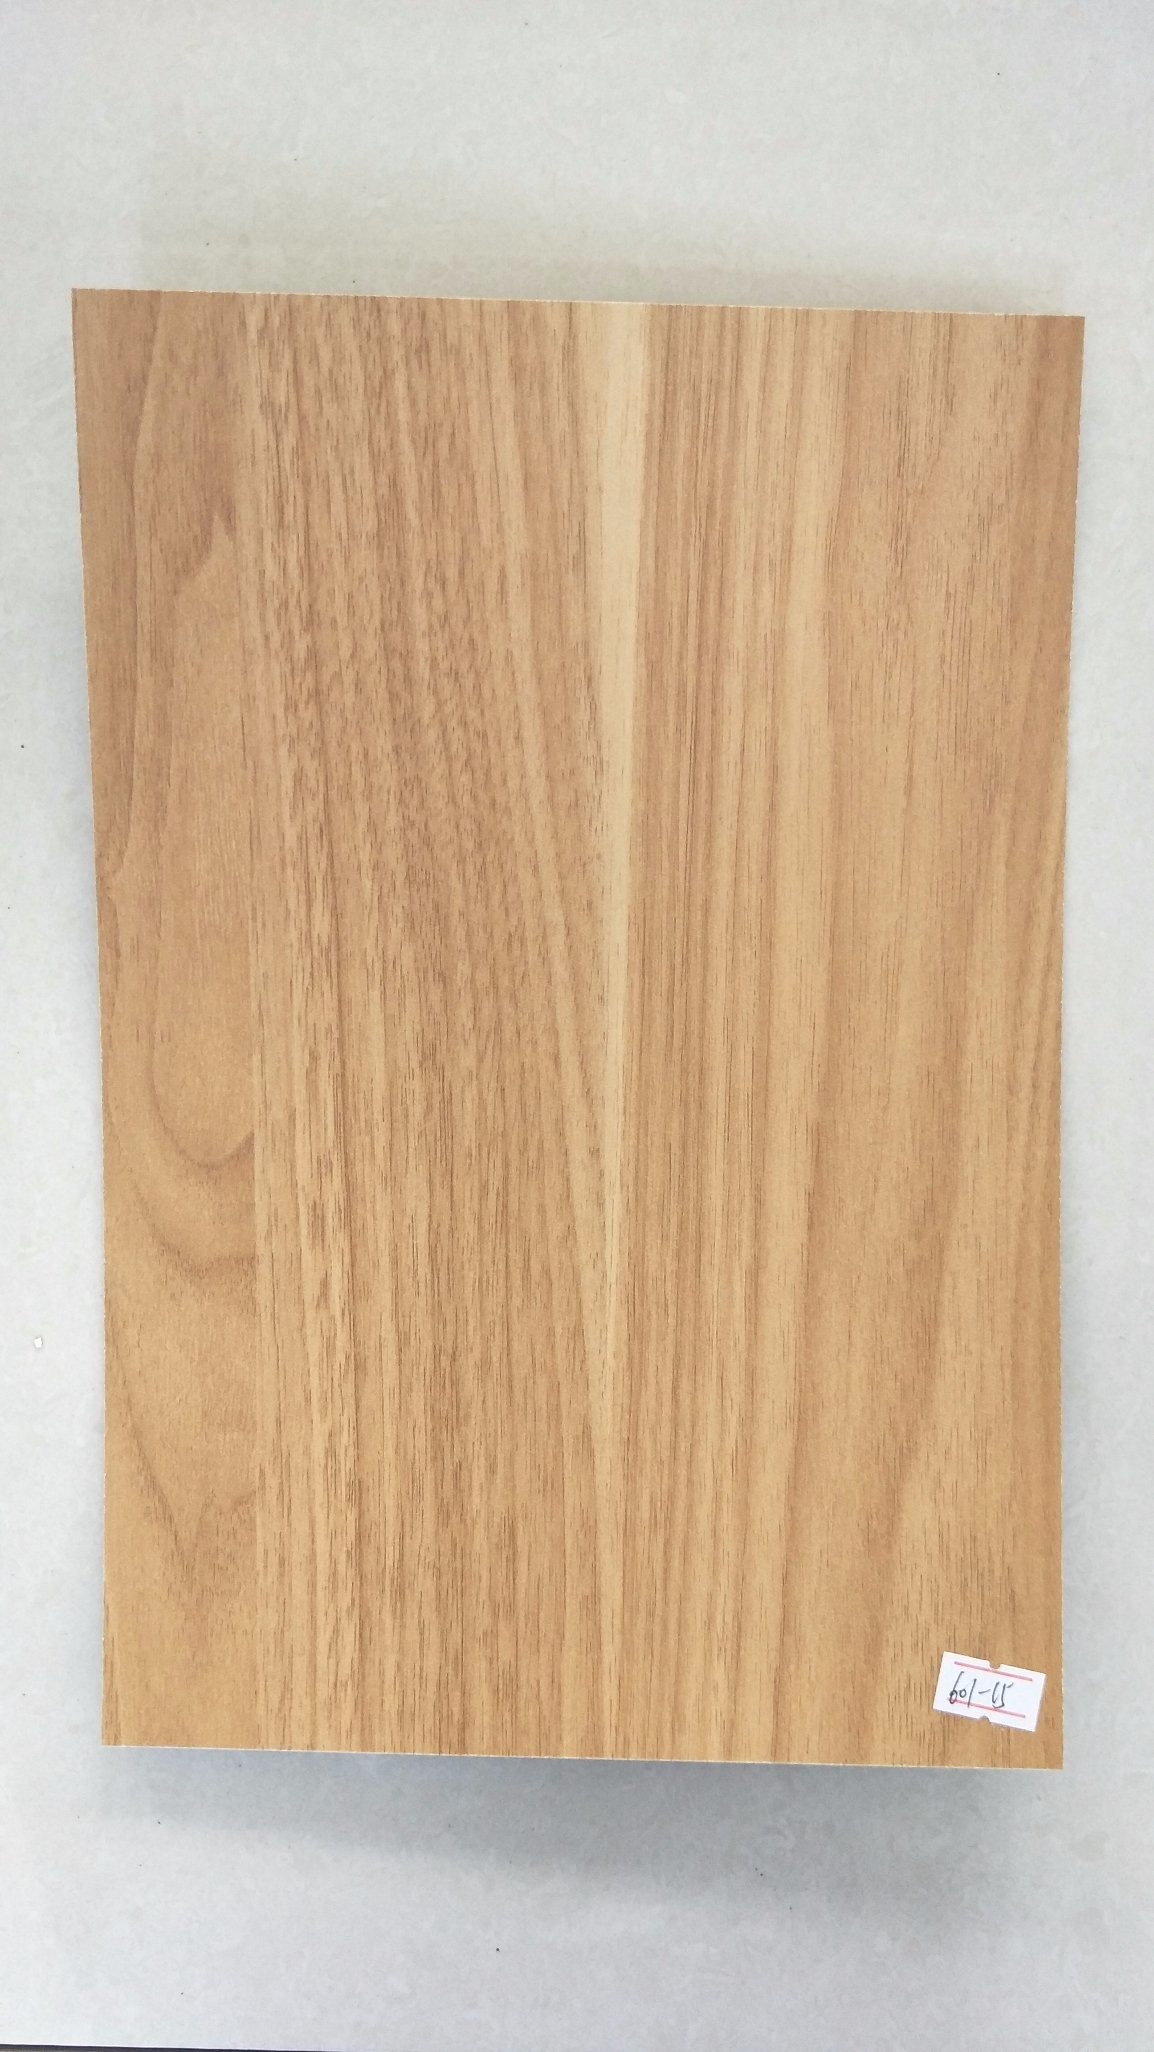 High Pressure Laminate Flooring Wood